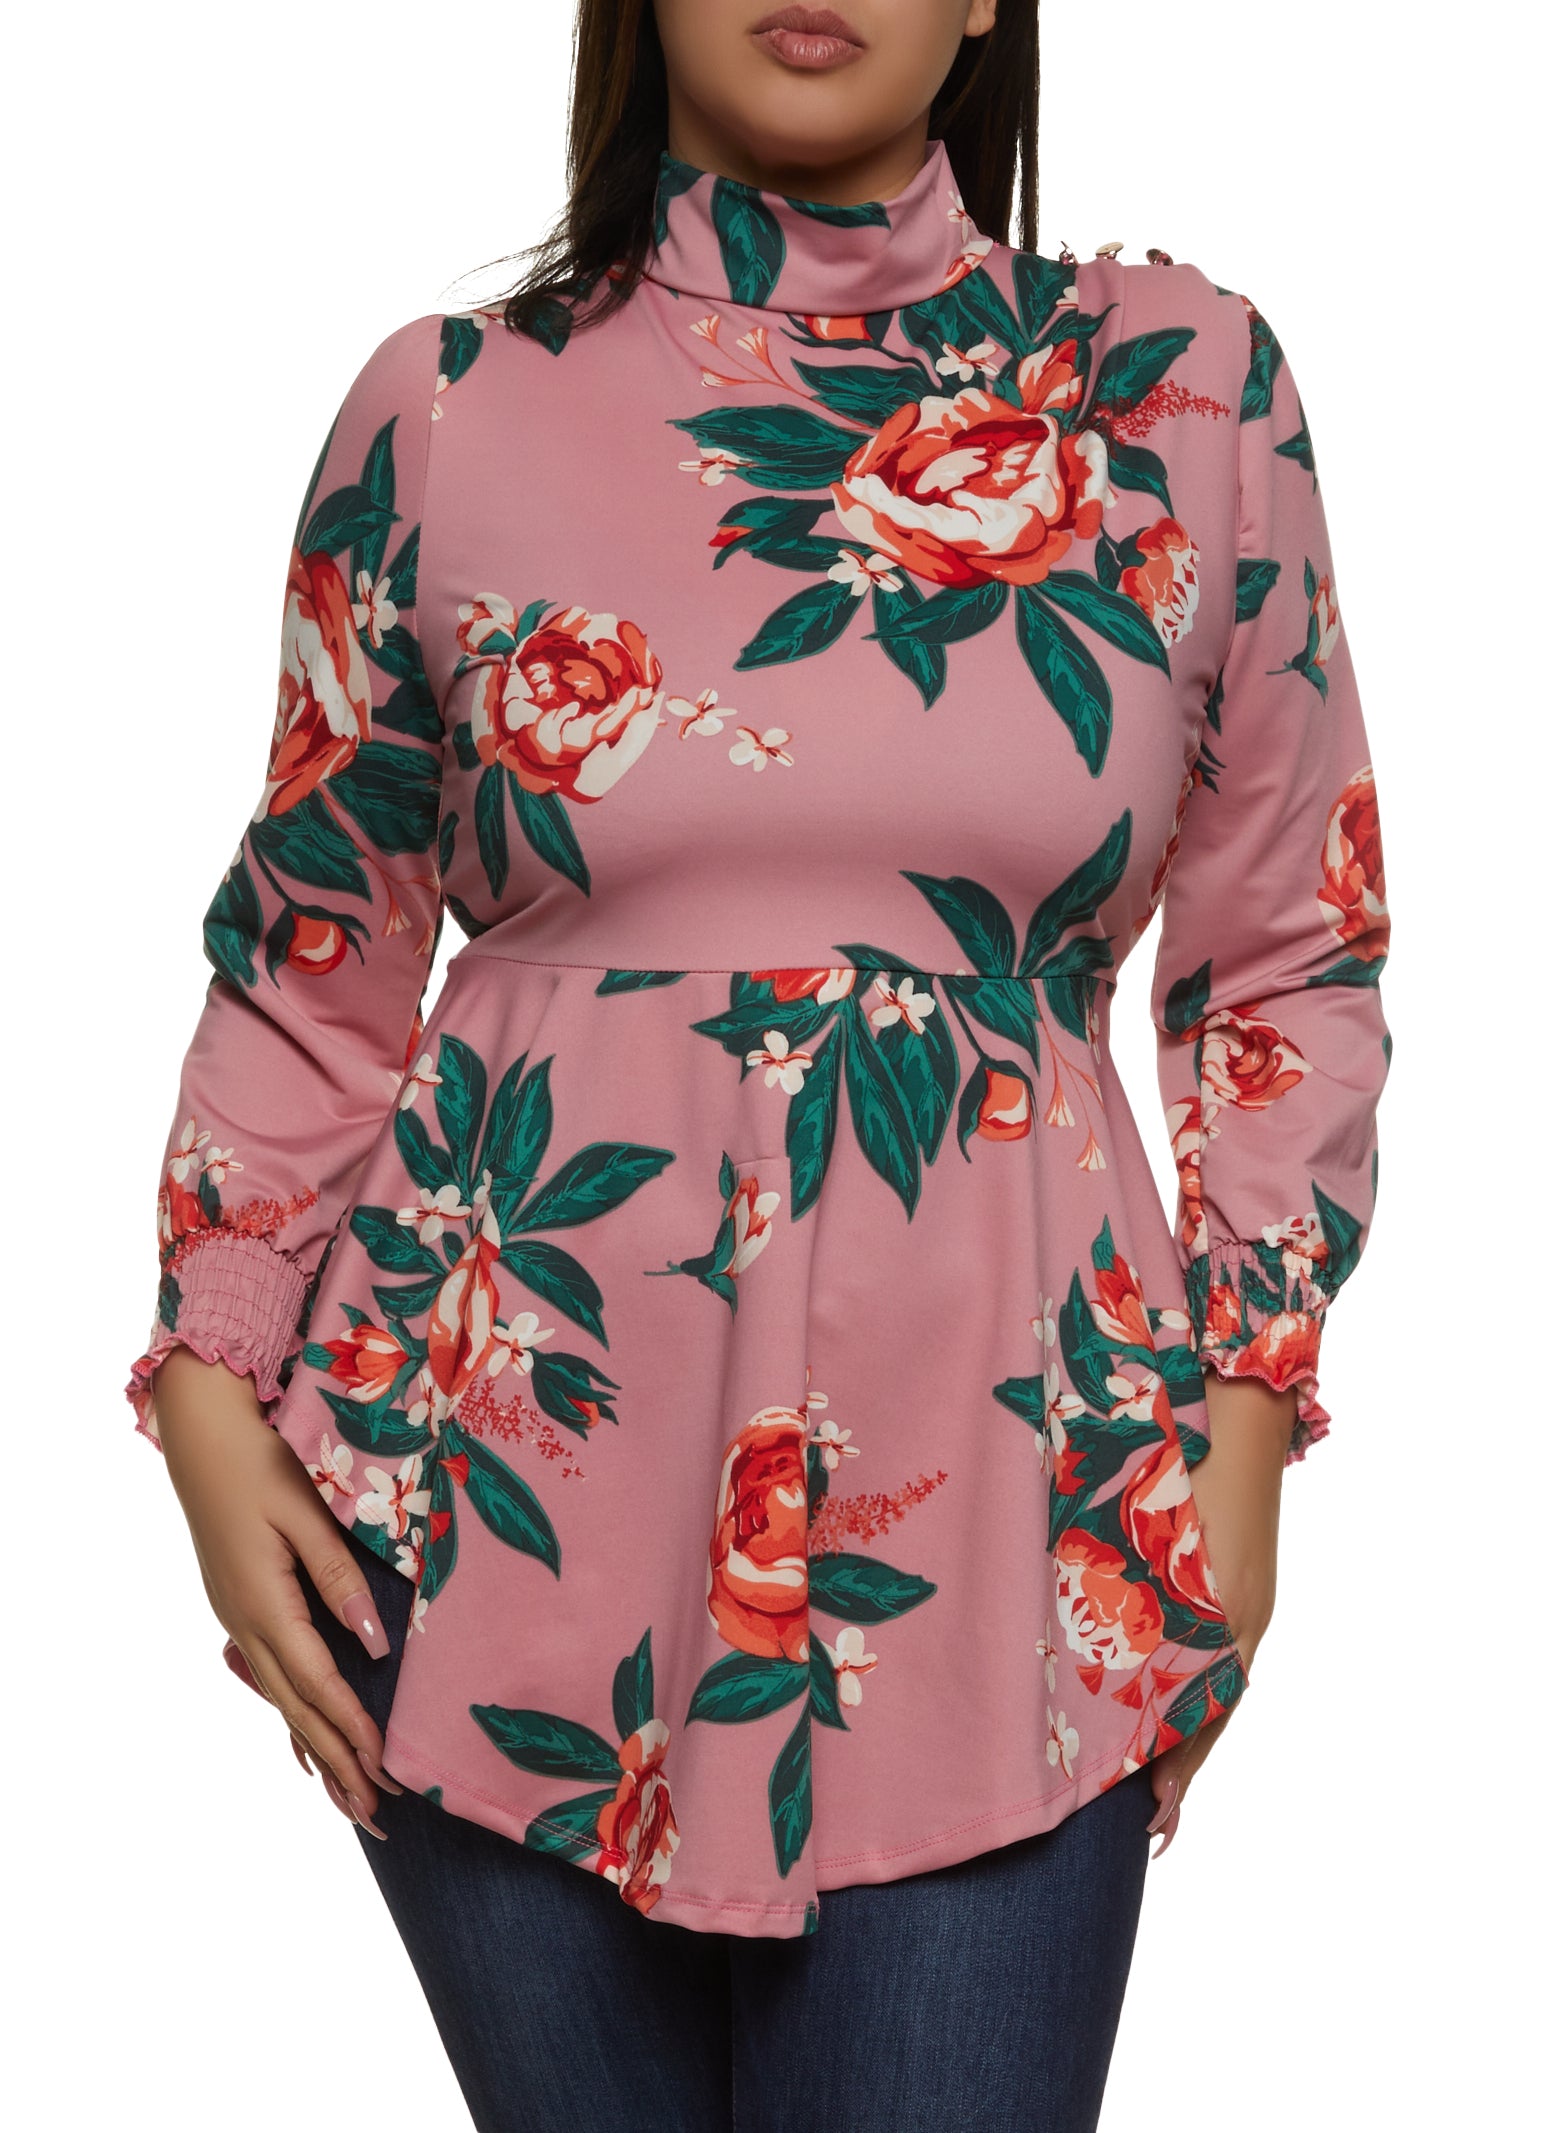 Womens Plus Size Floral Print Peplum Top, Pink, Size 3X